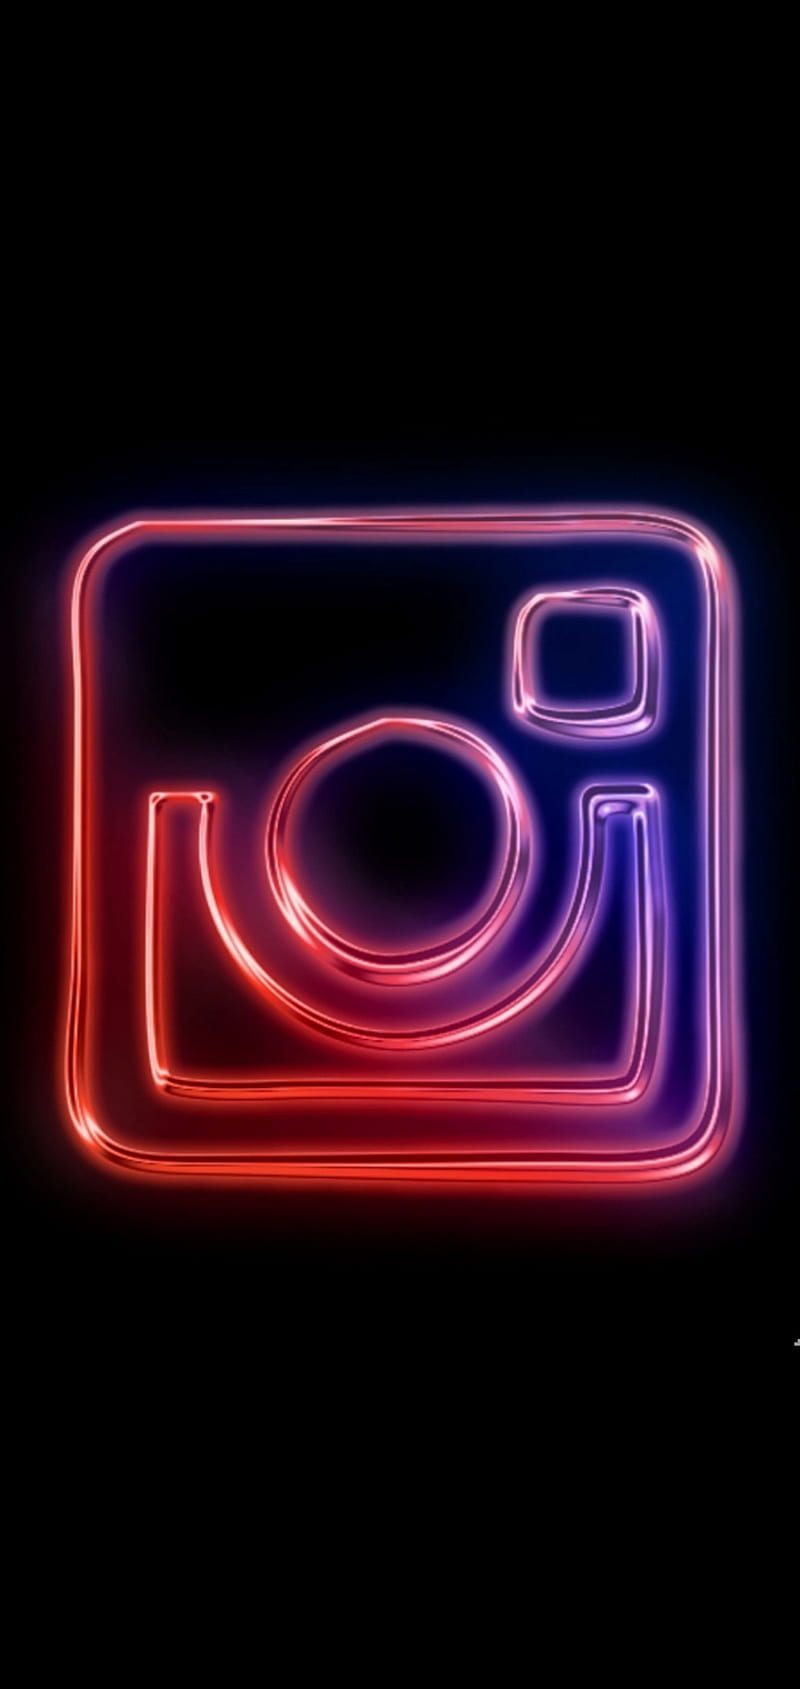 Instagram Color Vector SVG Icon - SVG Repo